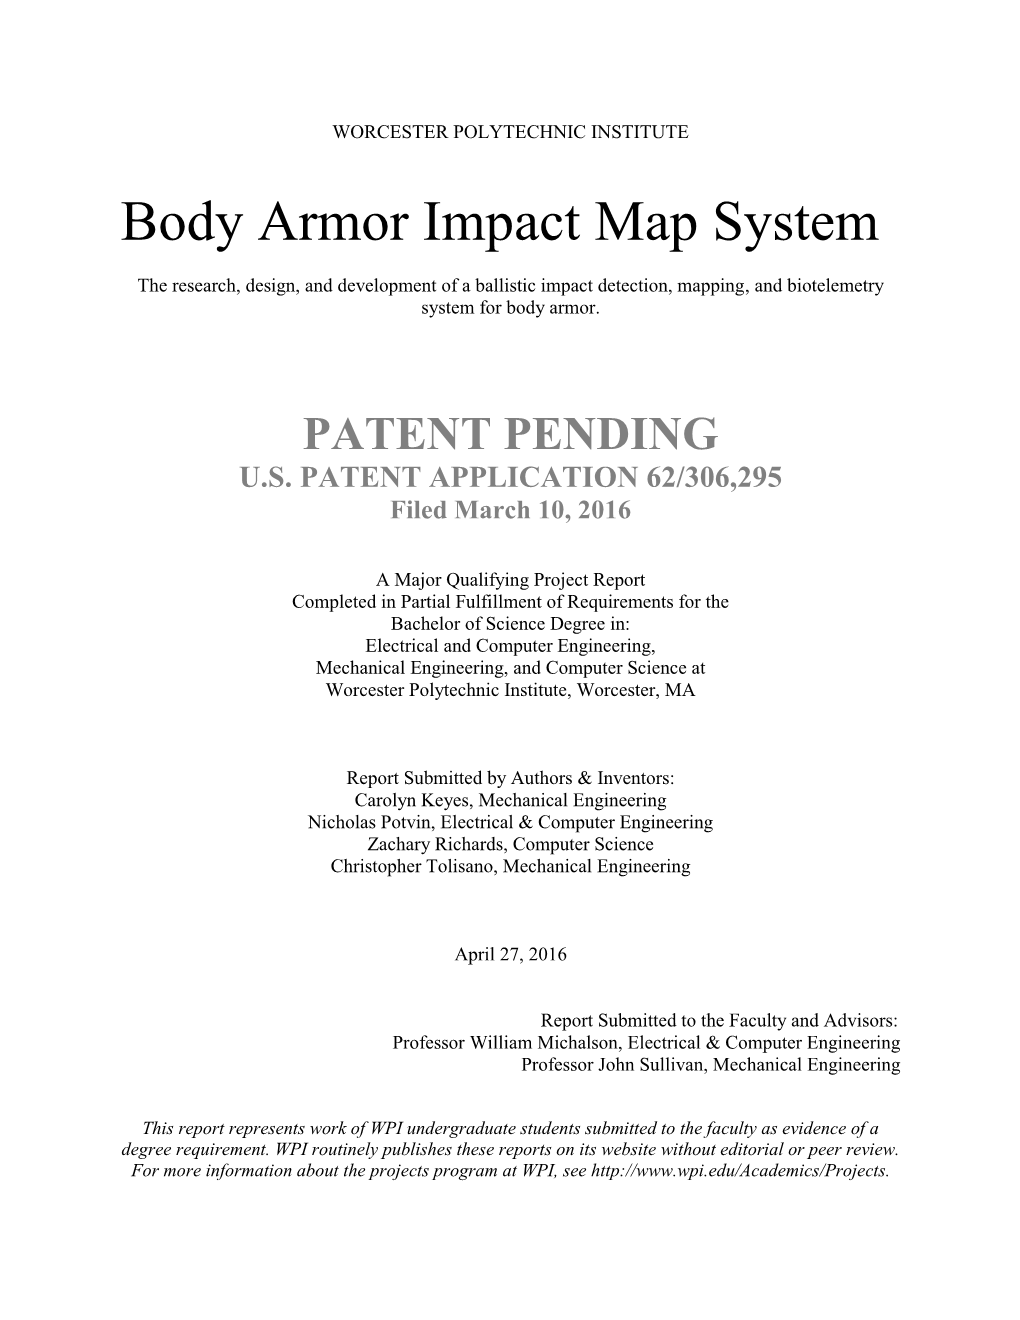 Body Armor Impact Map System